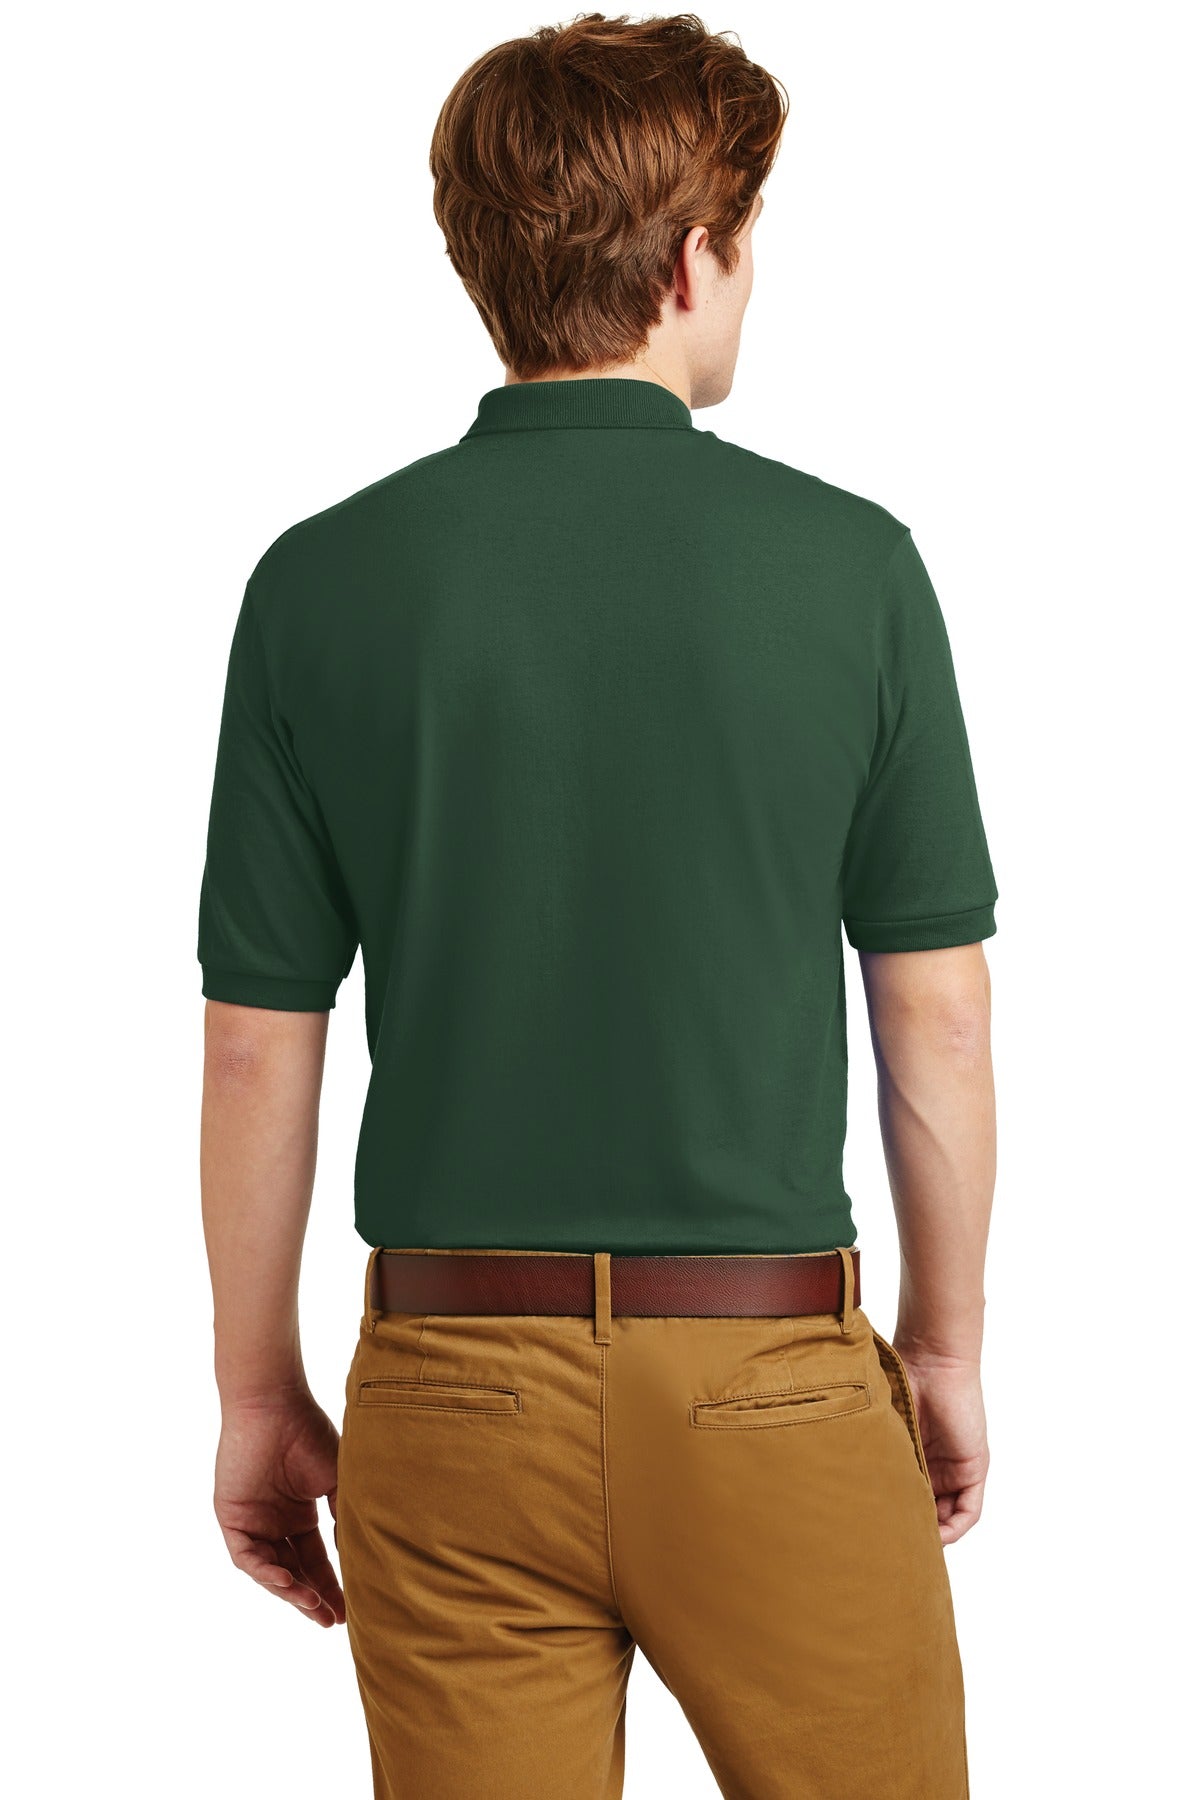 JERZEES® - SpotShield™ 5.4-Ounce Jersey Knit Sport Shirt. 437M [Forest] - DFW Impression